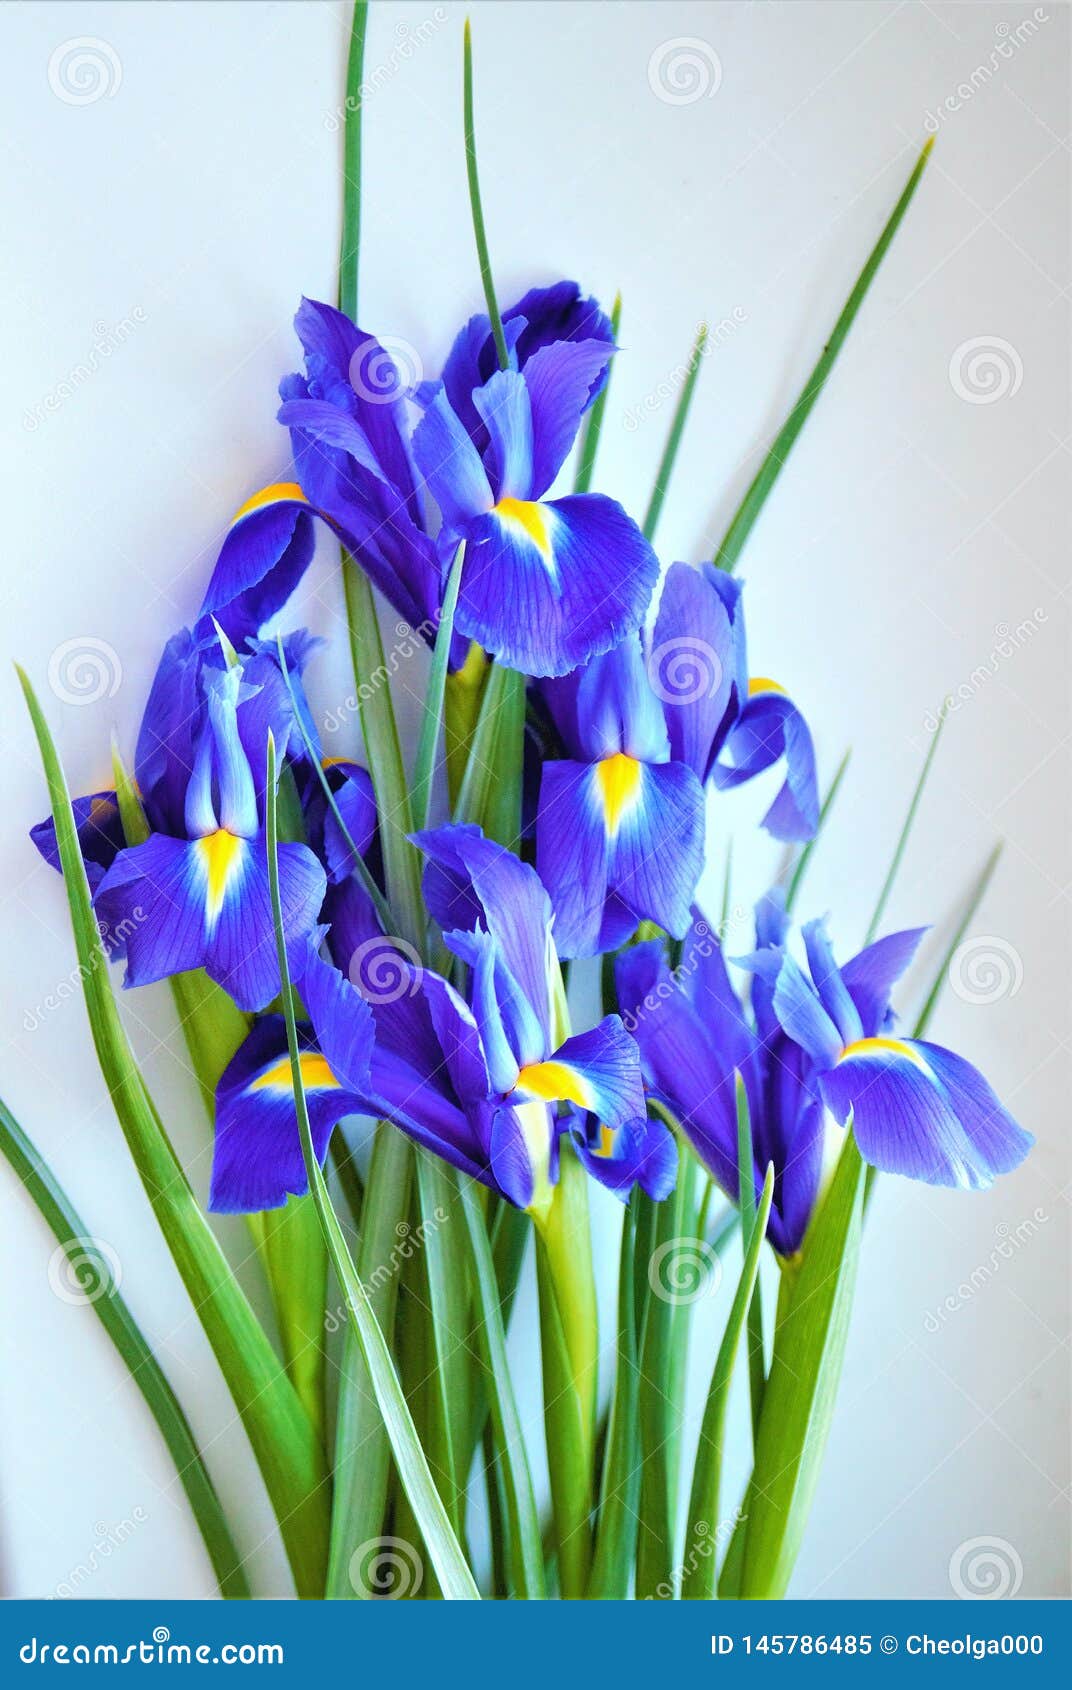 Purple flowers of irises stock image. Image of garden - 145786485